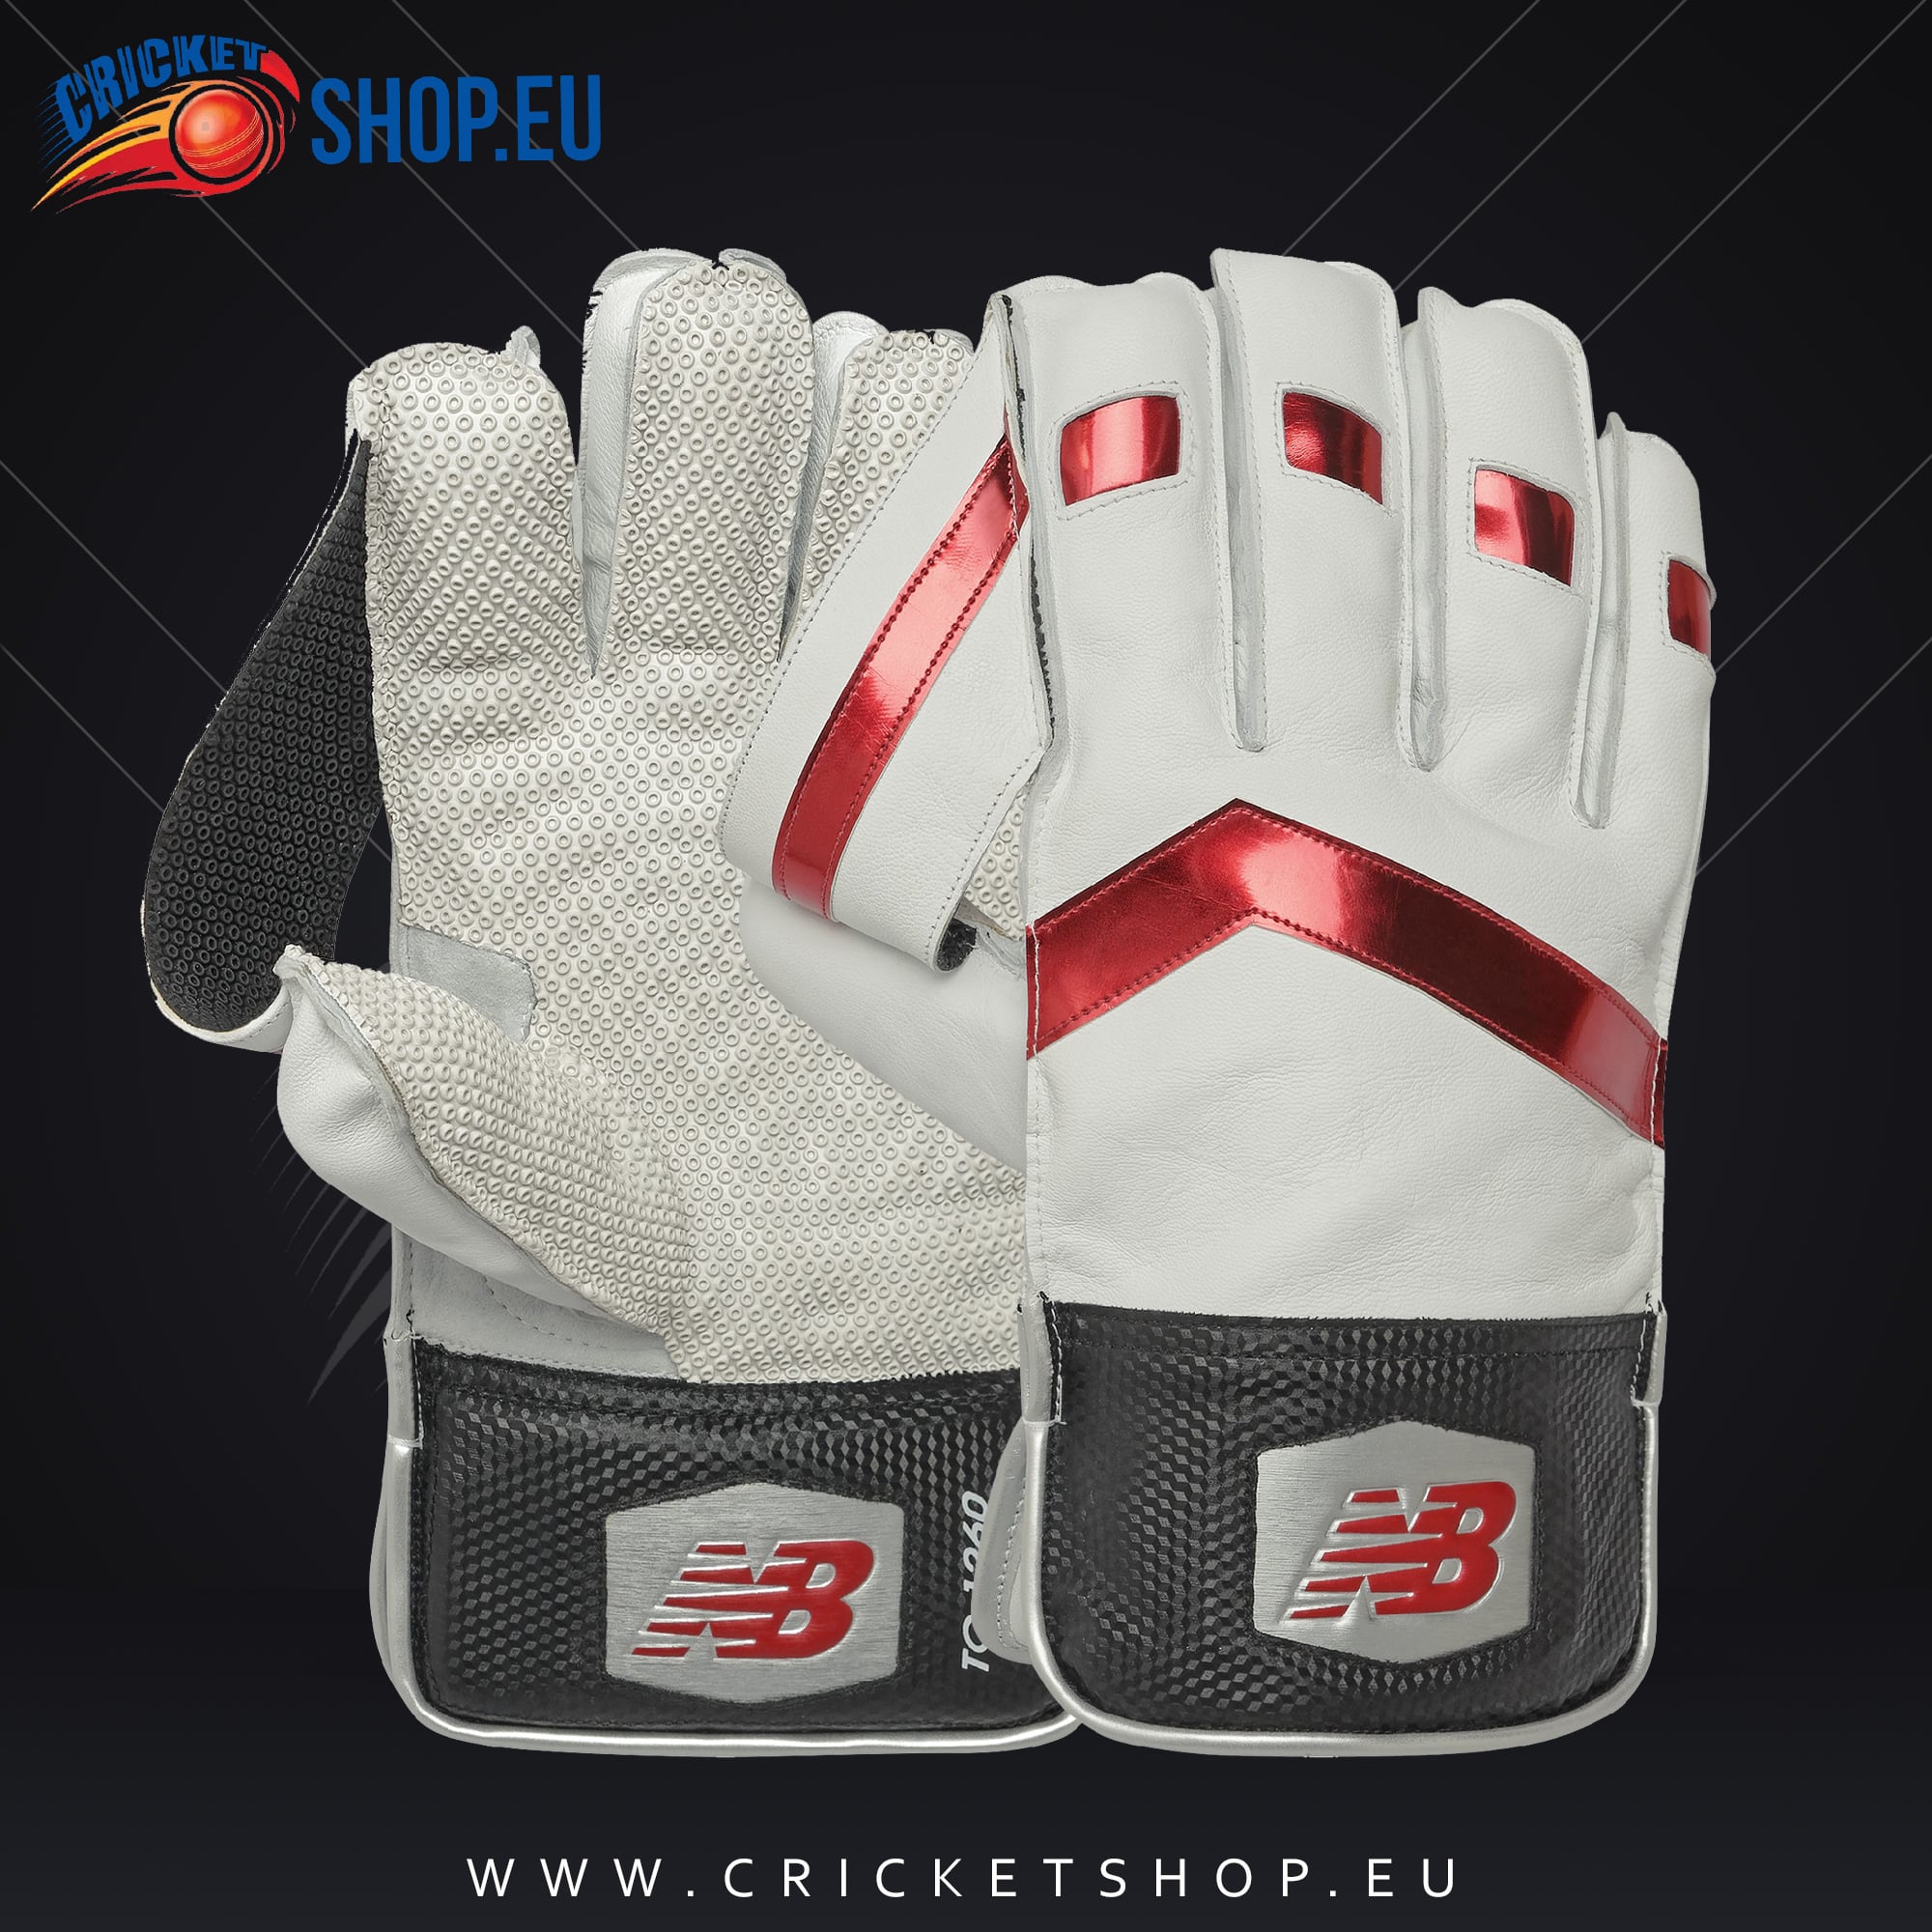 New Balance TC 1260 Wicket Keeping Gloves